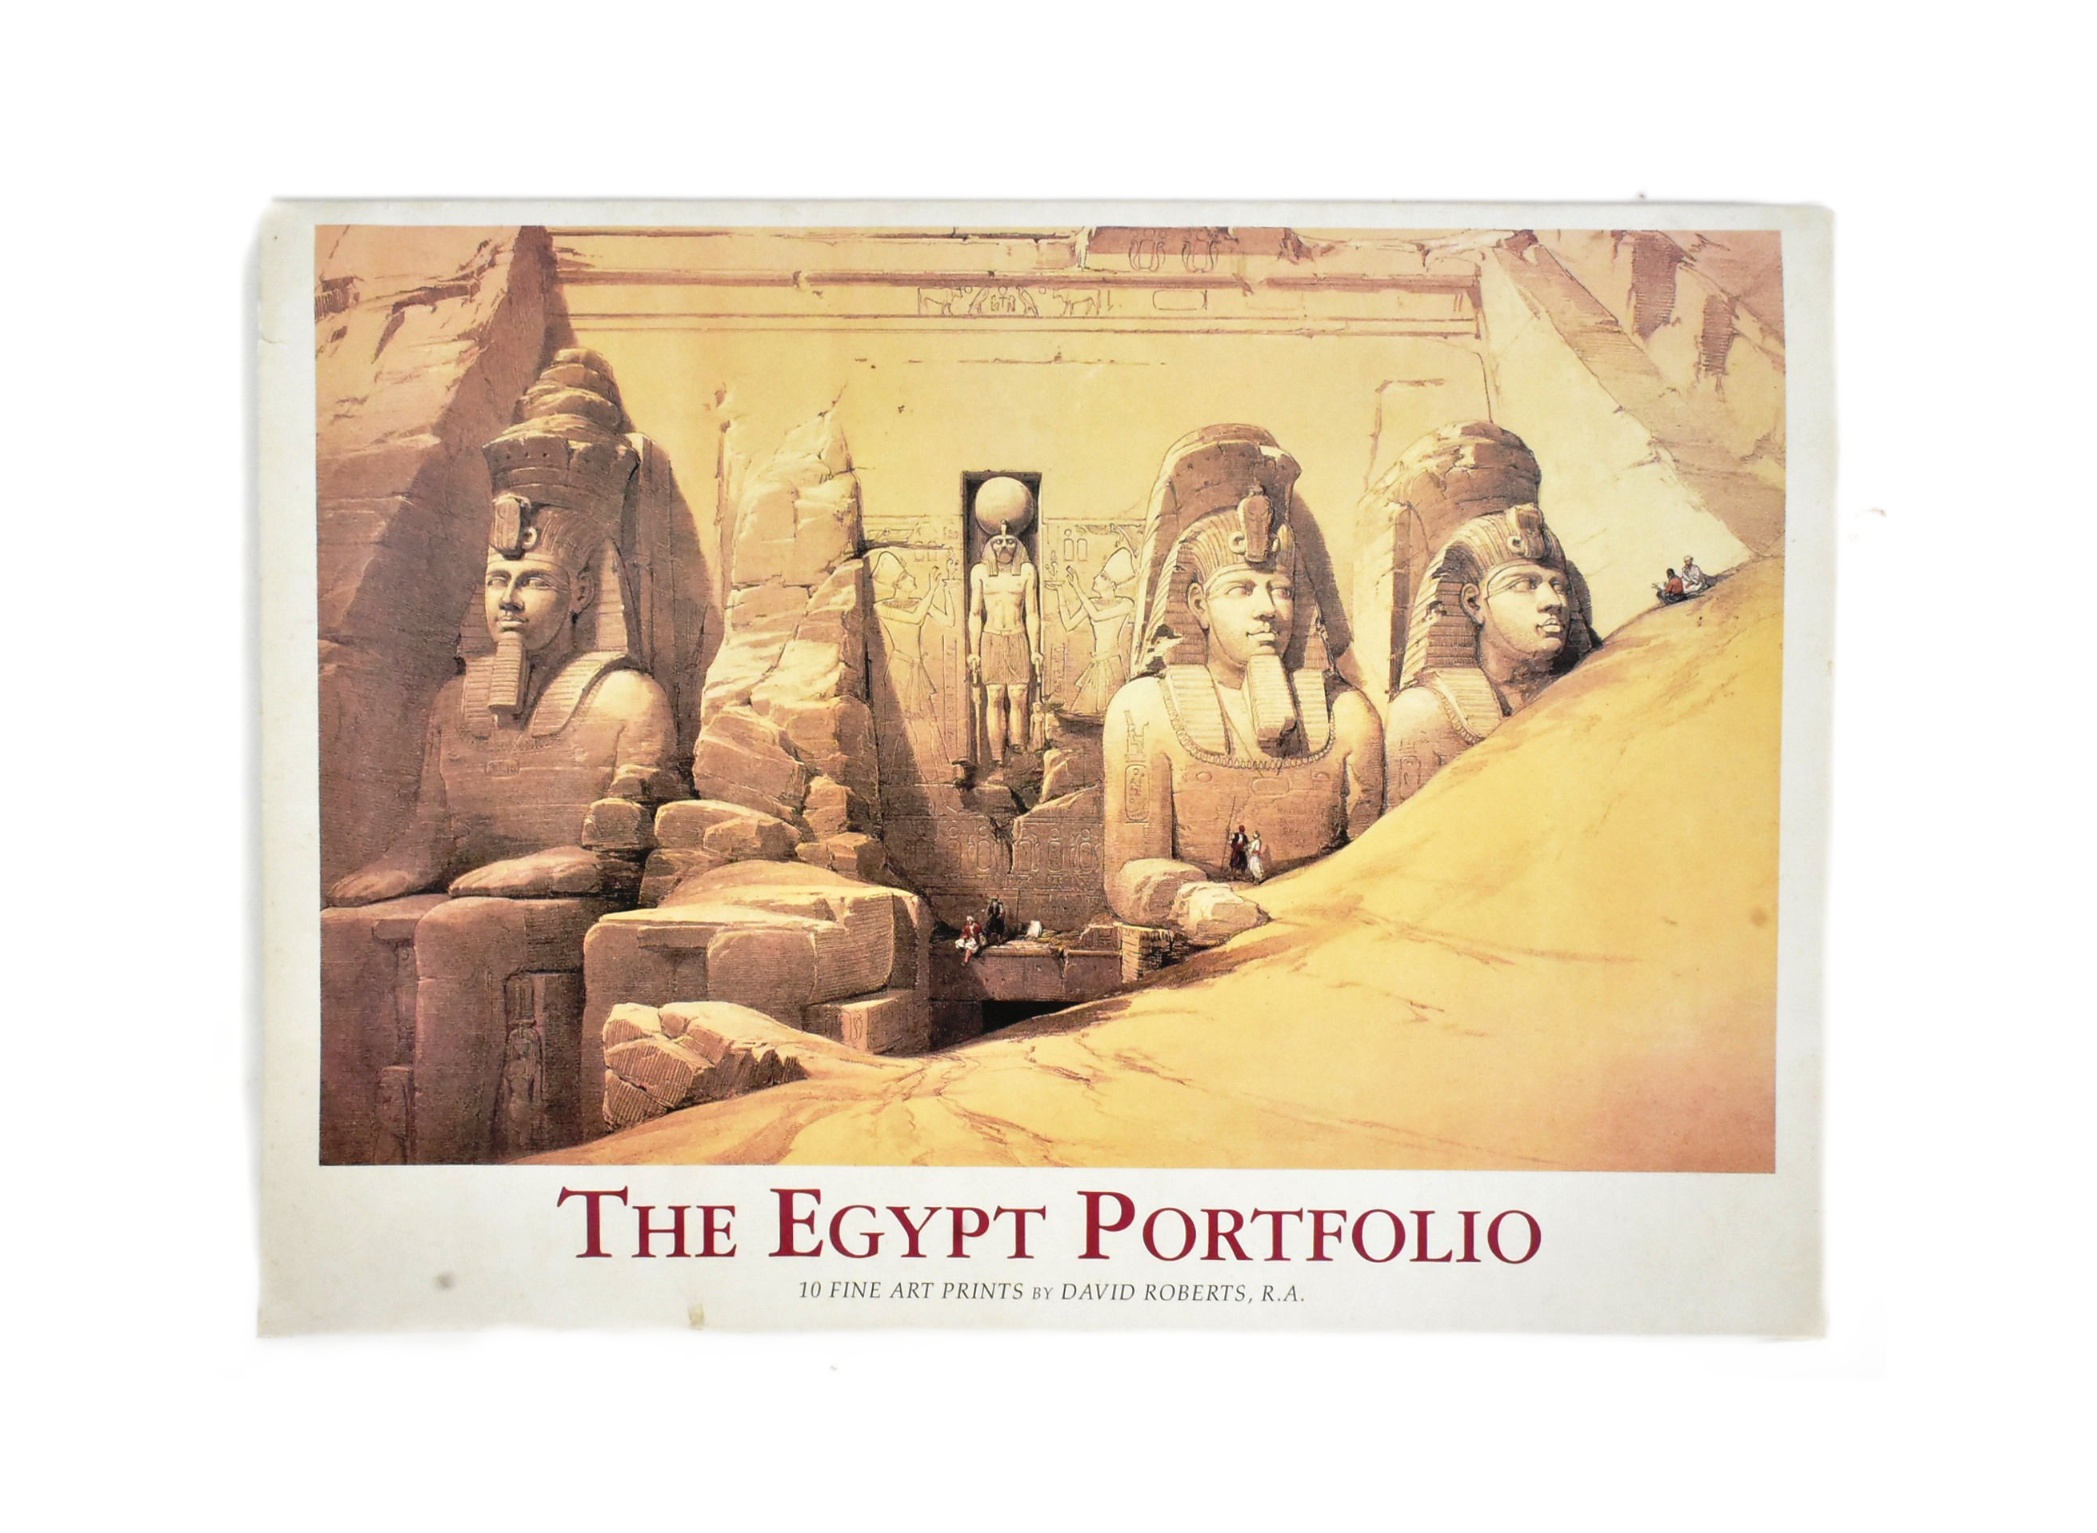 THE EGYPT PORTFOLIO - 10 PRINTS BY DAVID ROBERT, R.A.